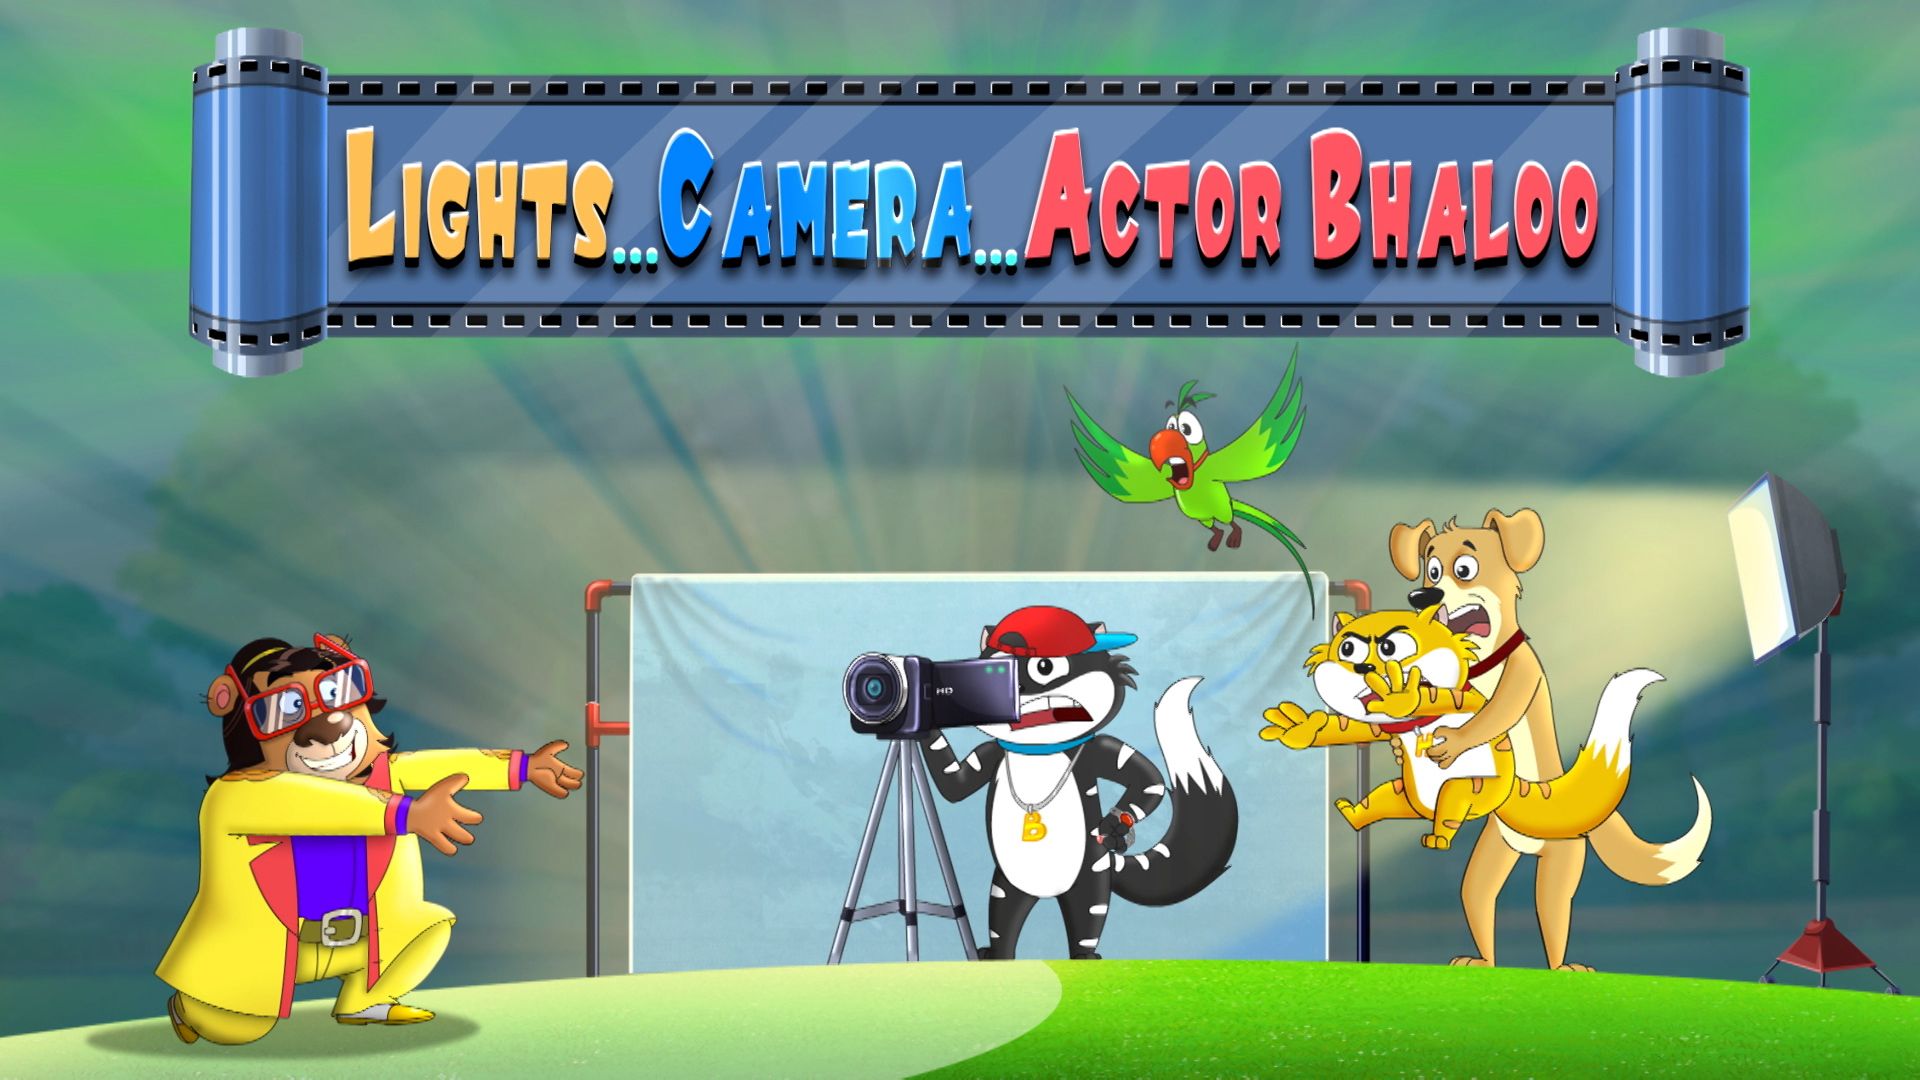 Light Camera Actor Bhaloo